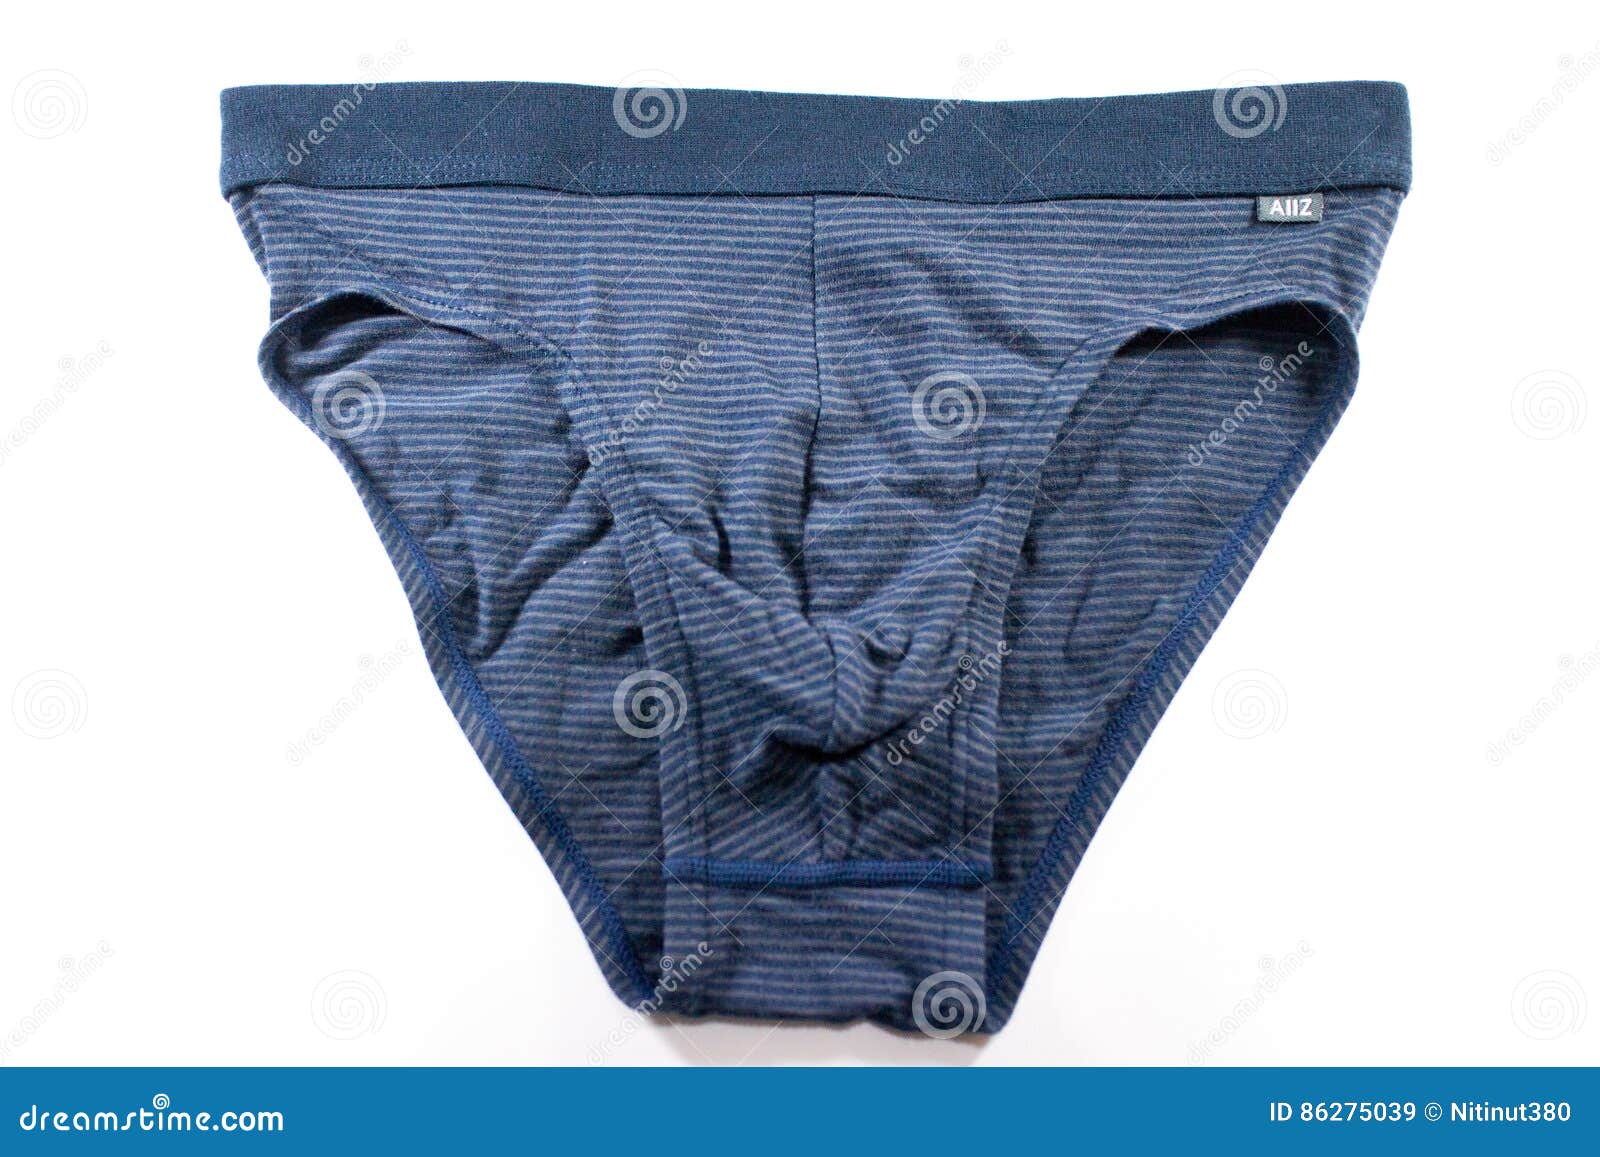 Product Shot of AIIZ Men Underwear Editorial Stock Image - Image of ...